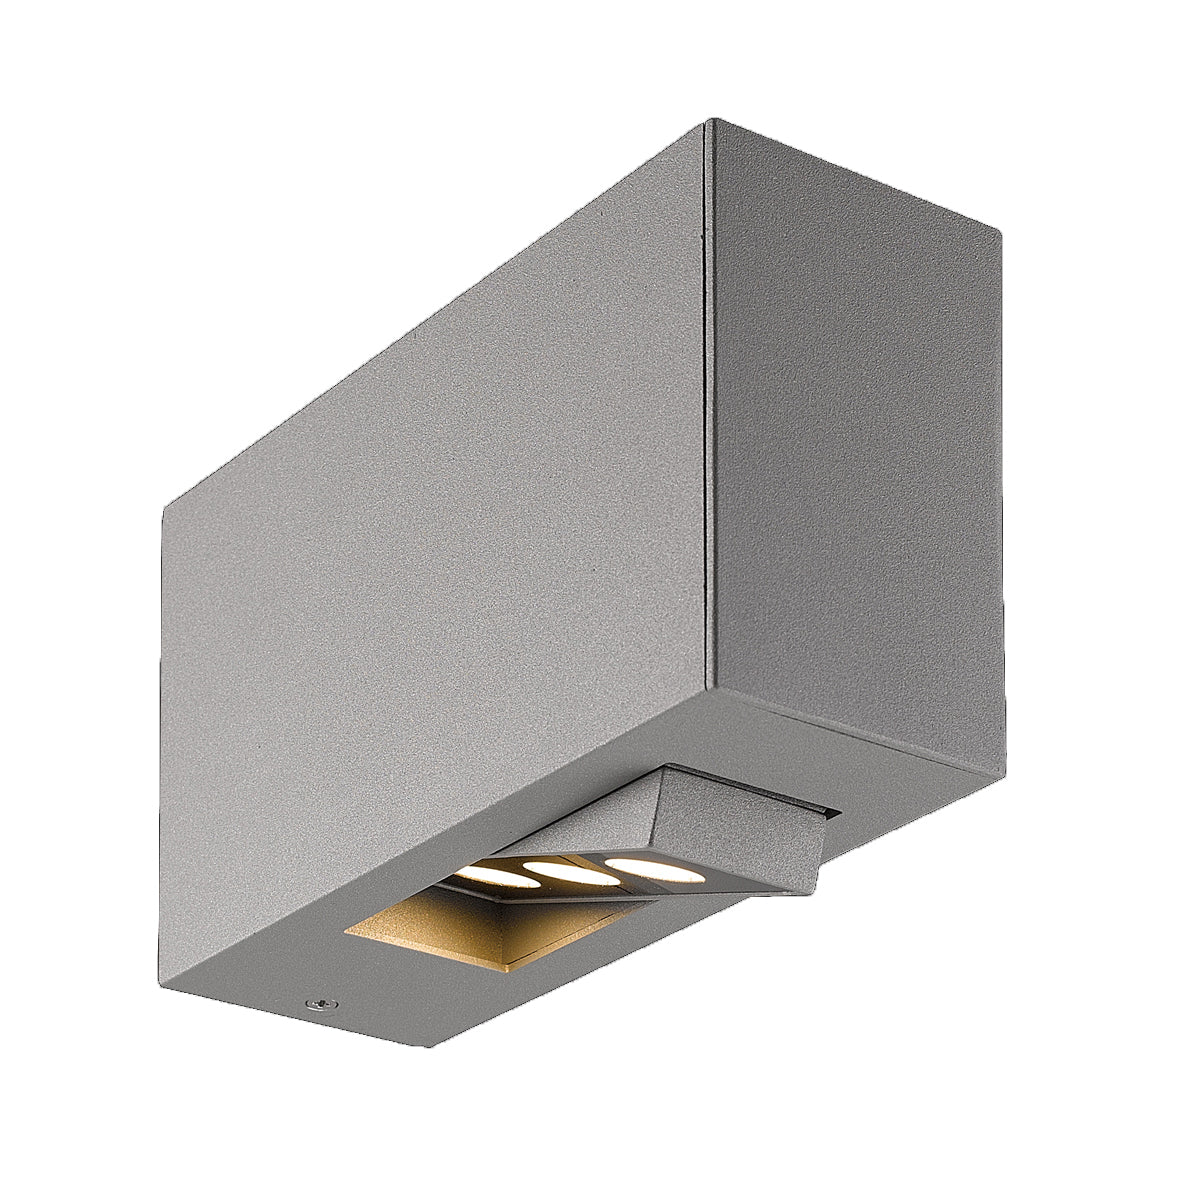 OSCAR Outdoor sconce Aluminum - 28280-019 INTEGRATED LED | EUROFASE